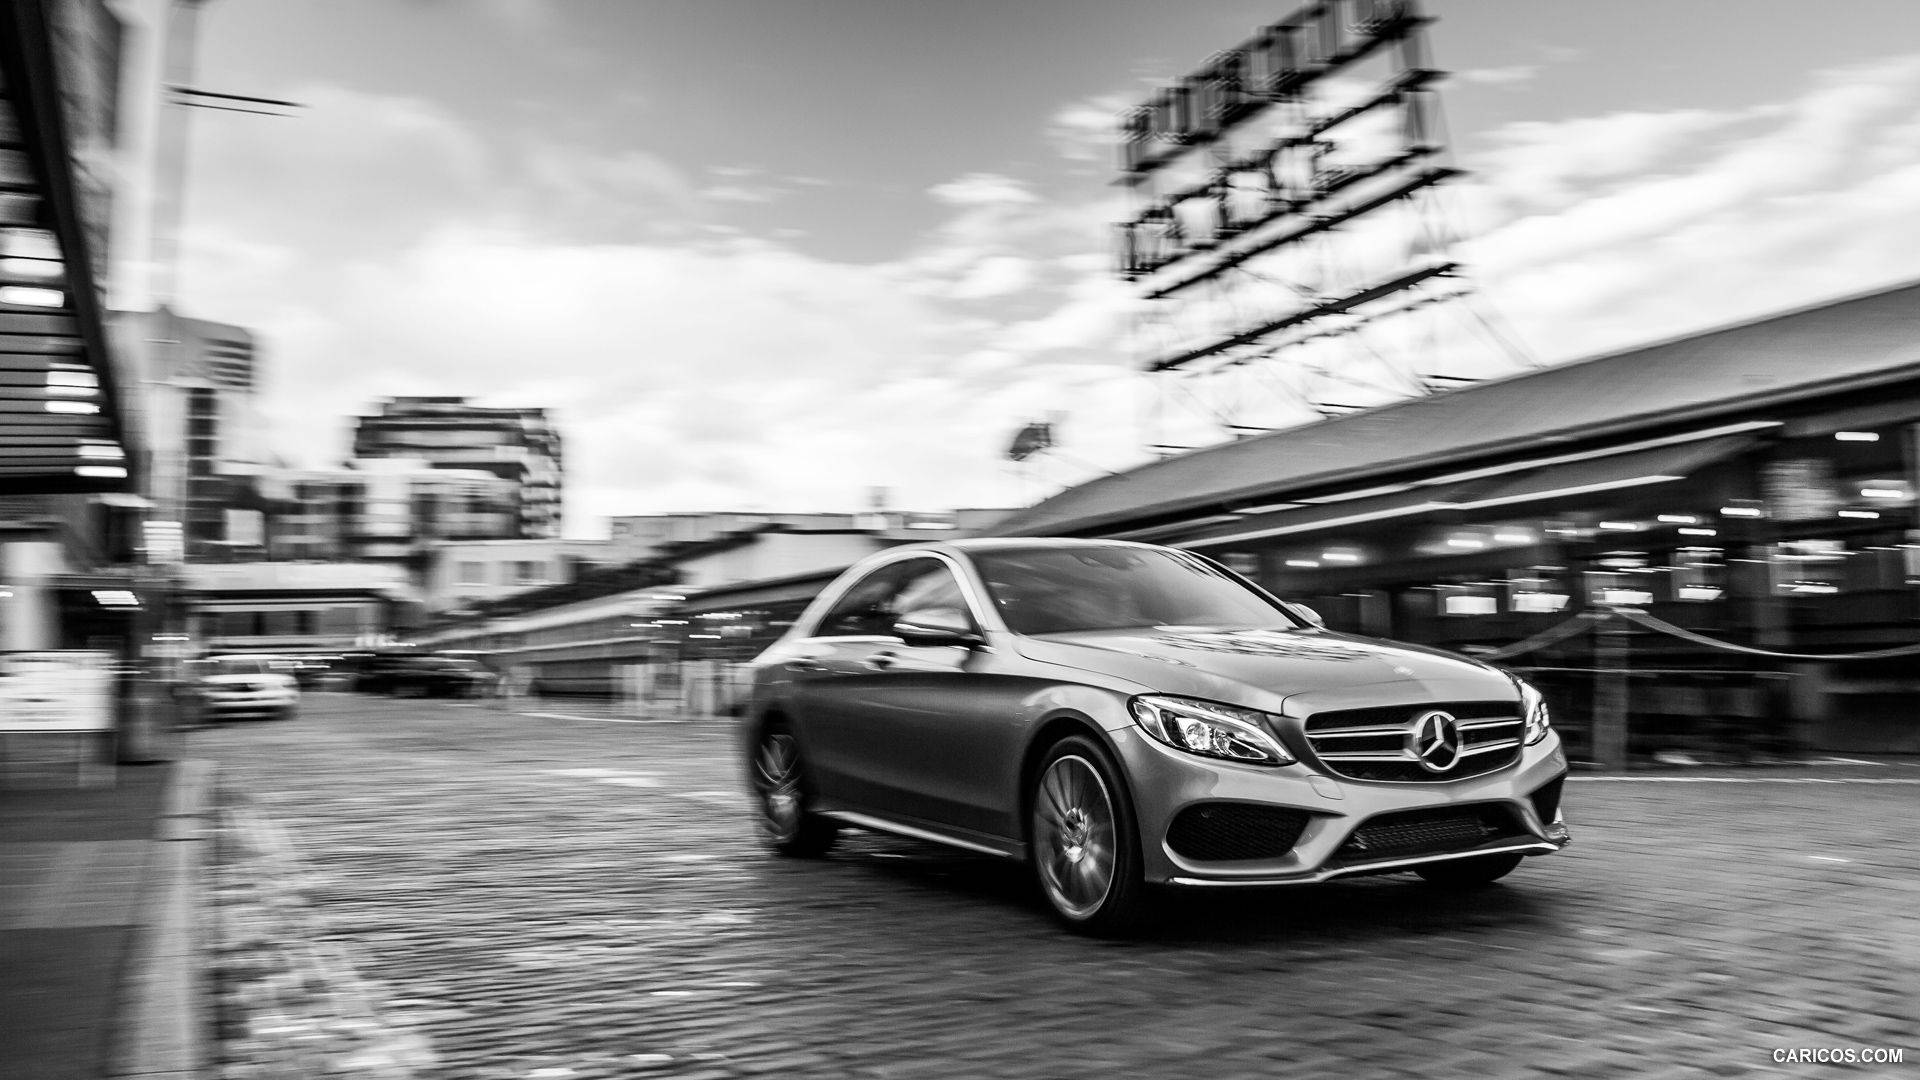 Sleek Mercedes Benz C300 With A Striking City Backdrop Wallpaper